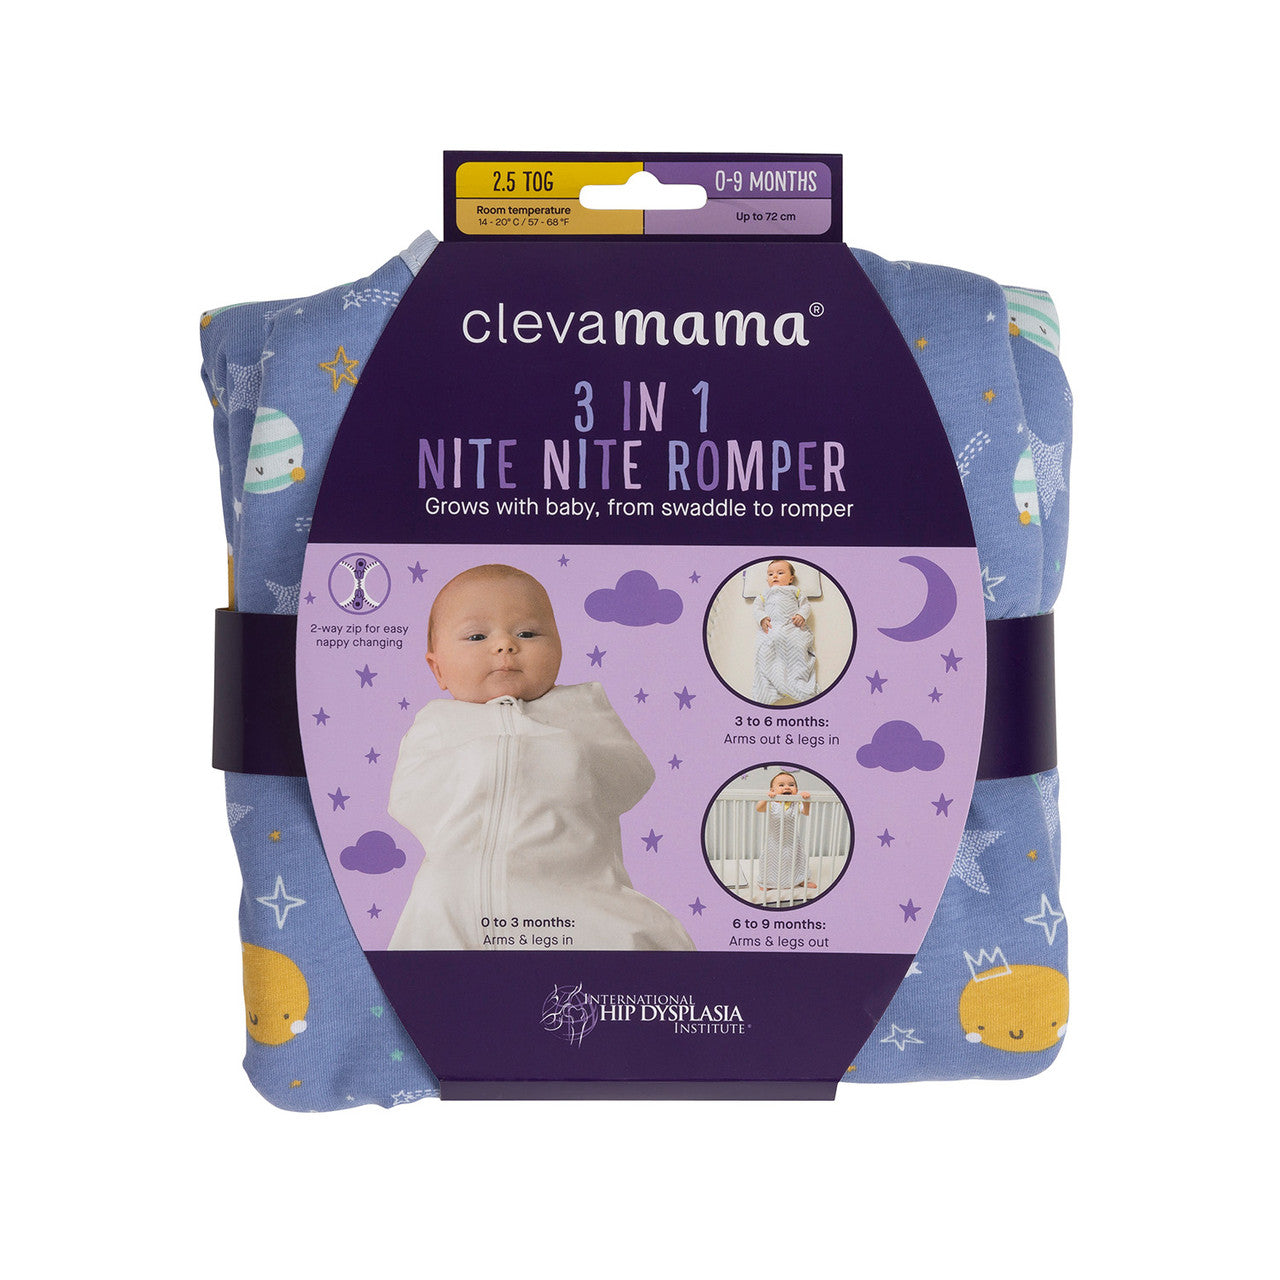 Cleva mama 3 in 1 Nite Nite Romper & Sleeping Bag - 2.5 Tog Blue